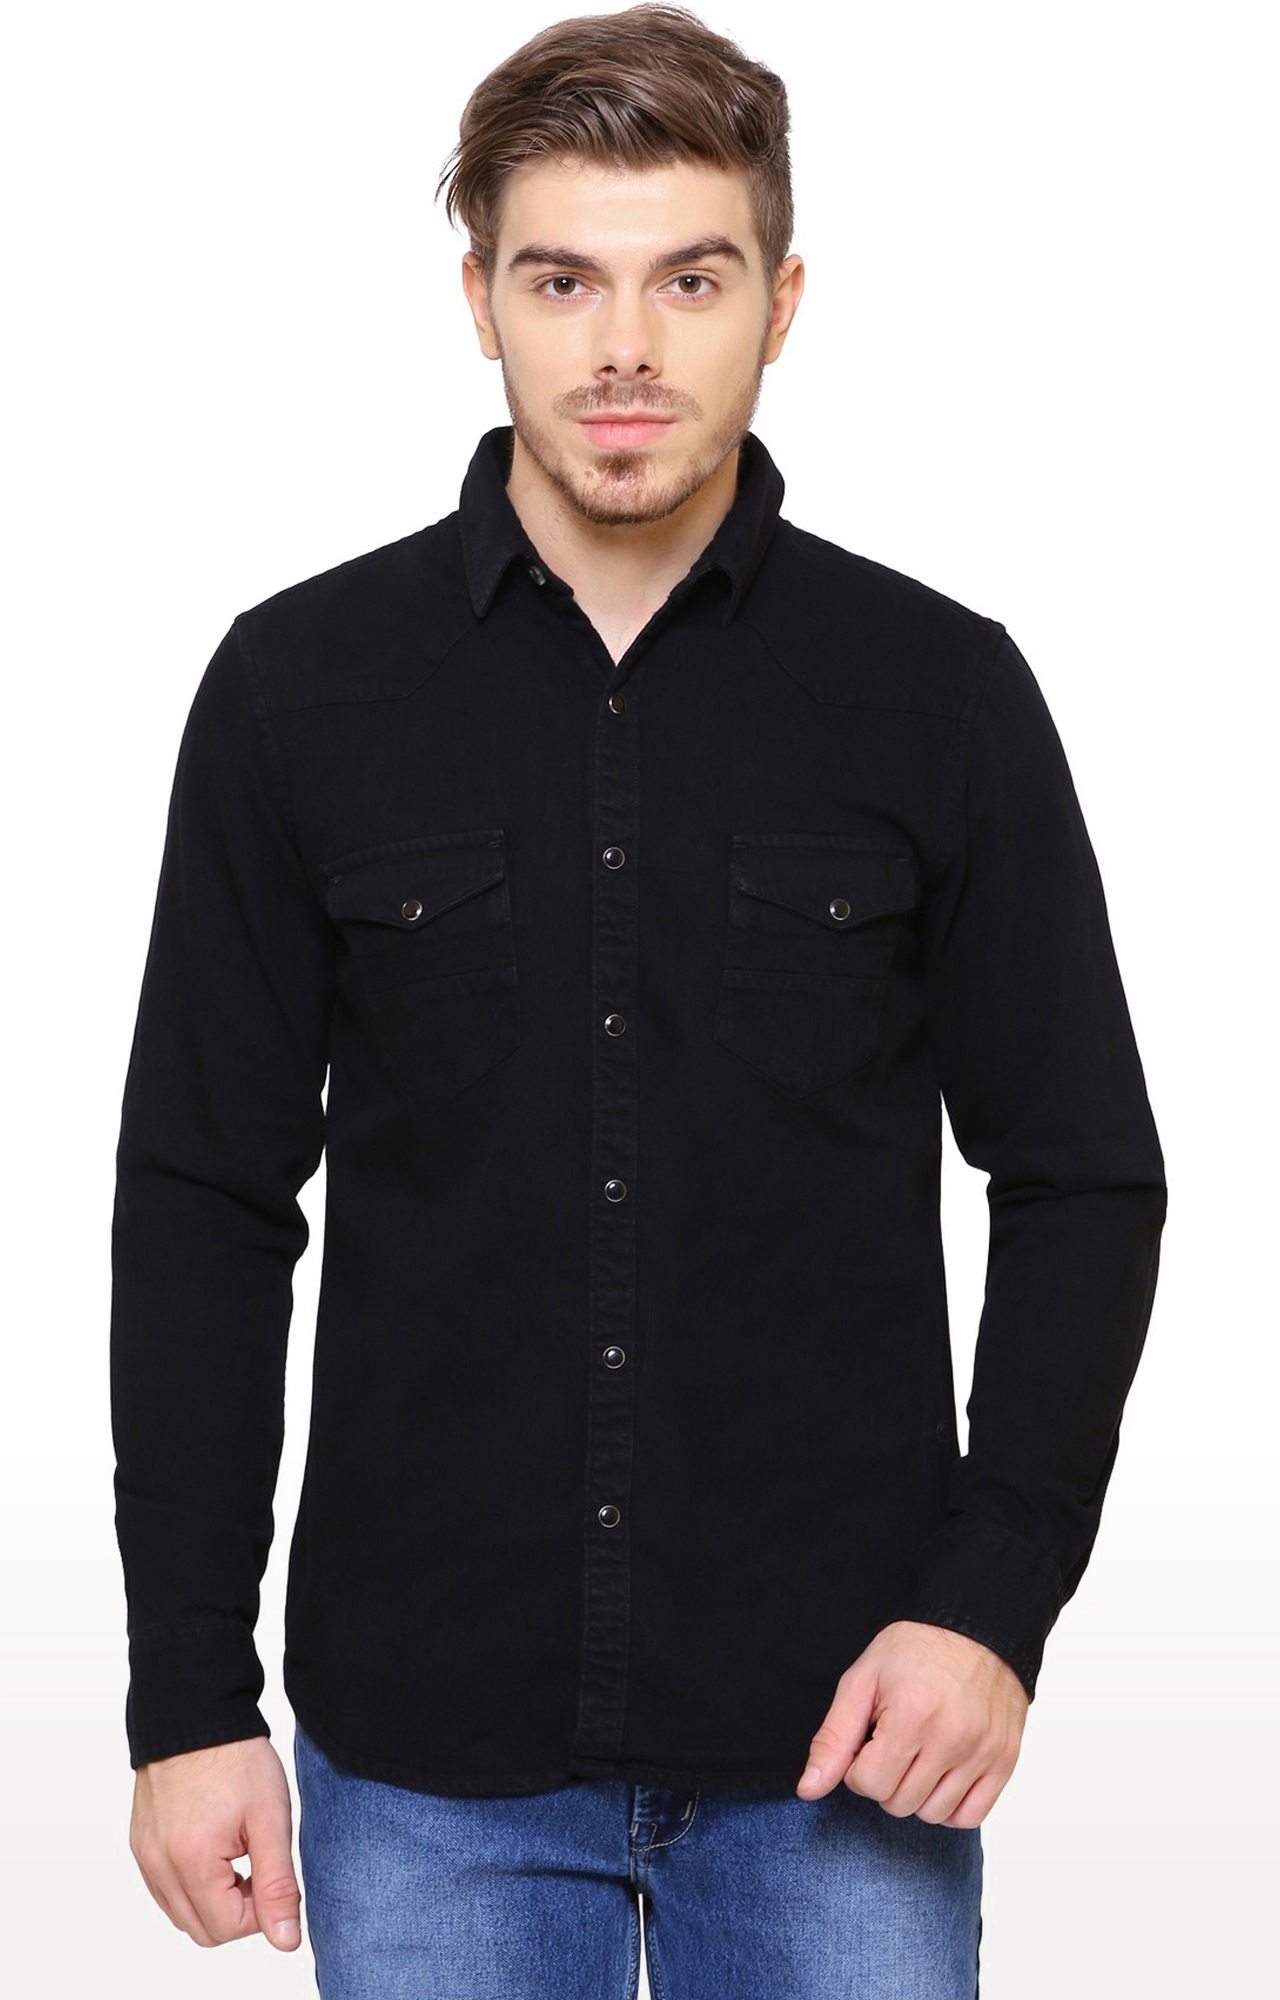 Southbay | Southbay Men's Jet Black Casual Denim Shirt